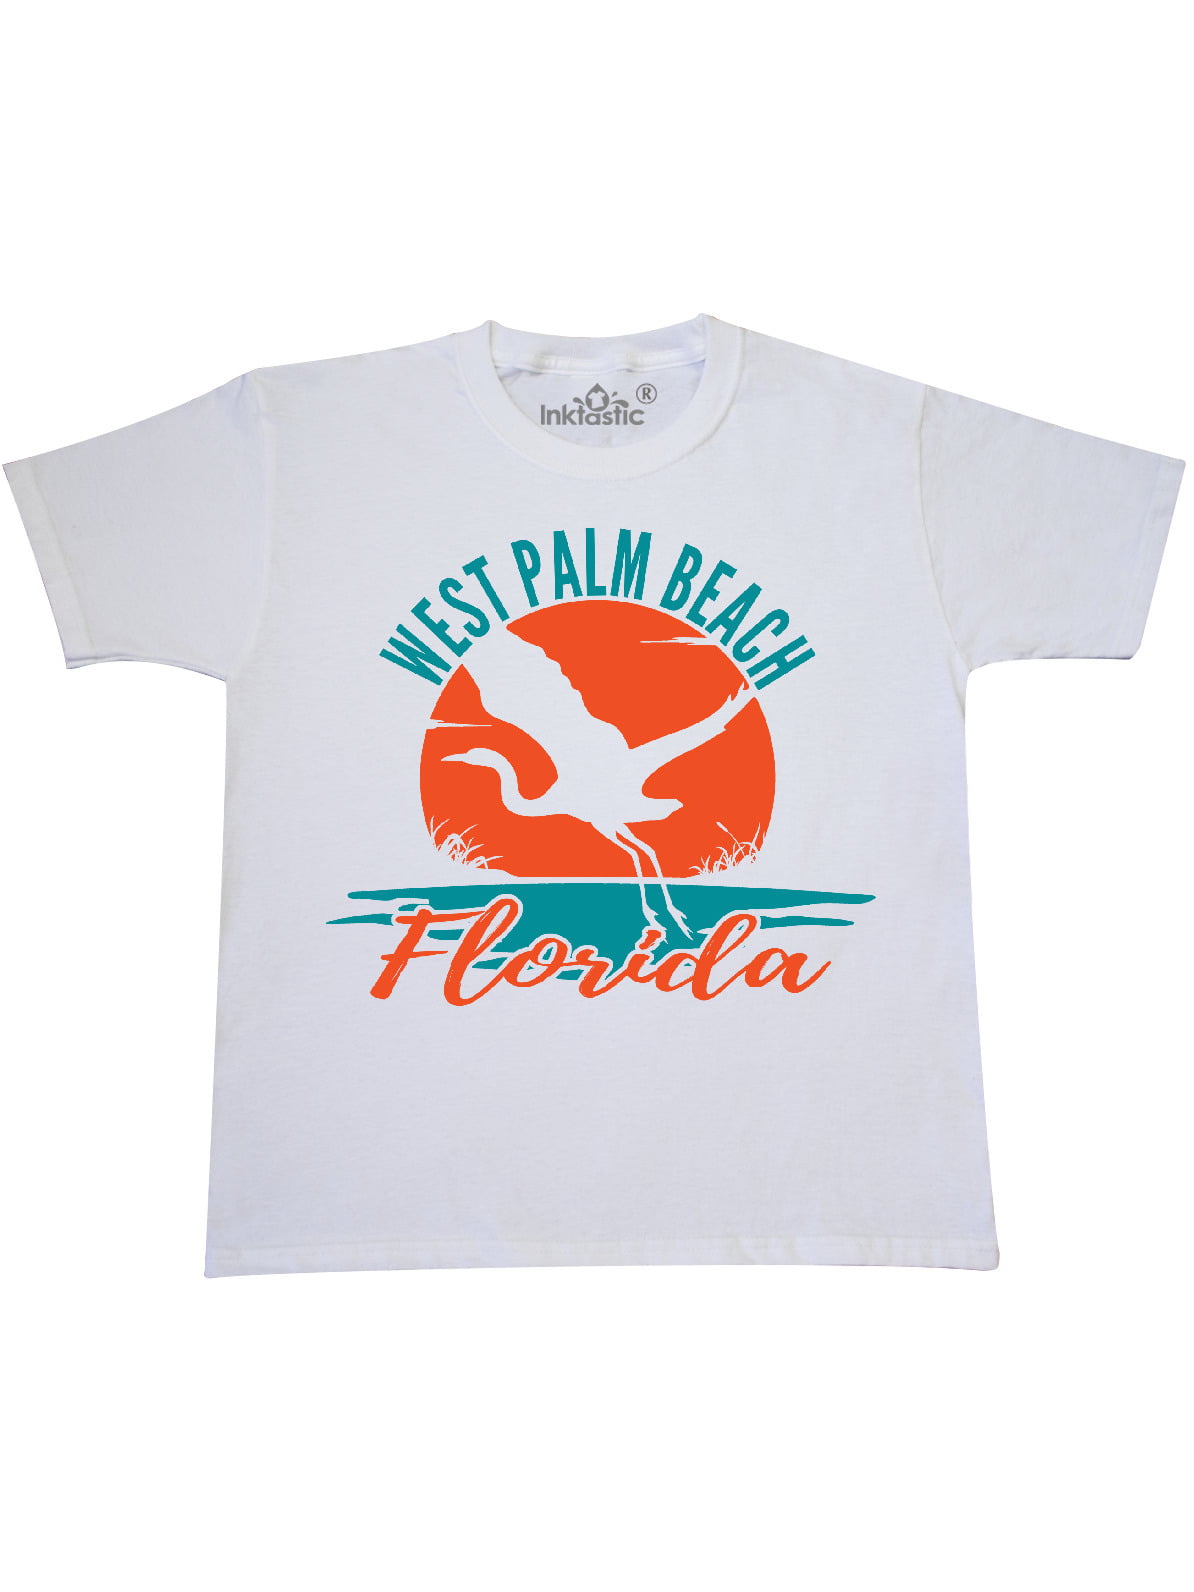 West Palm Beach Florida Vacation Youth T-Shirt - Walmart.com - Walmart.com